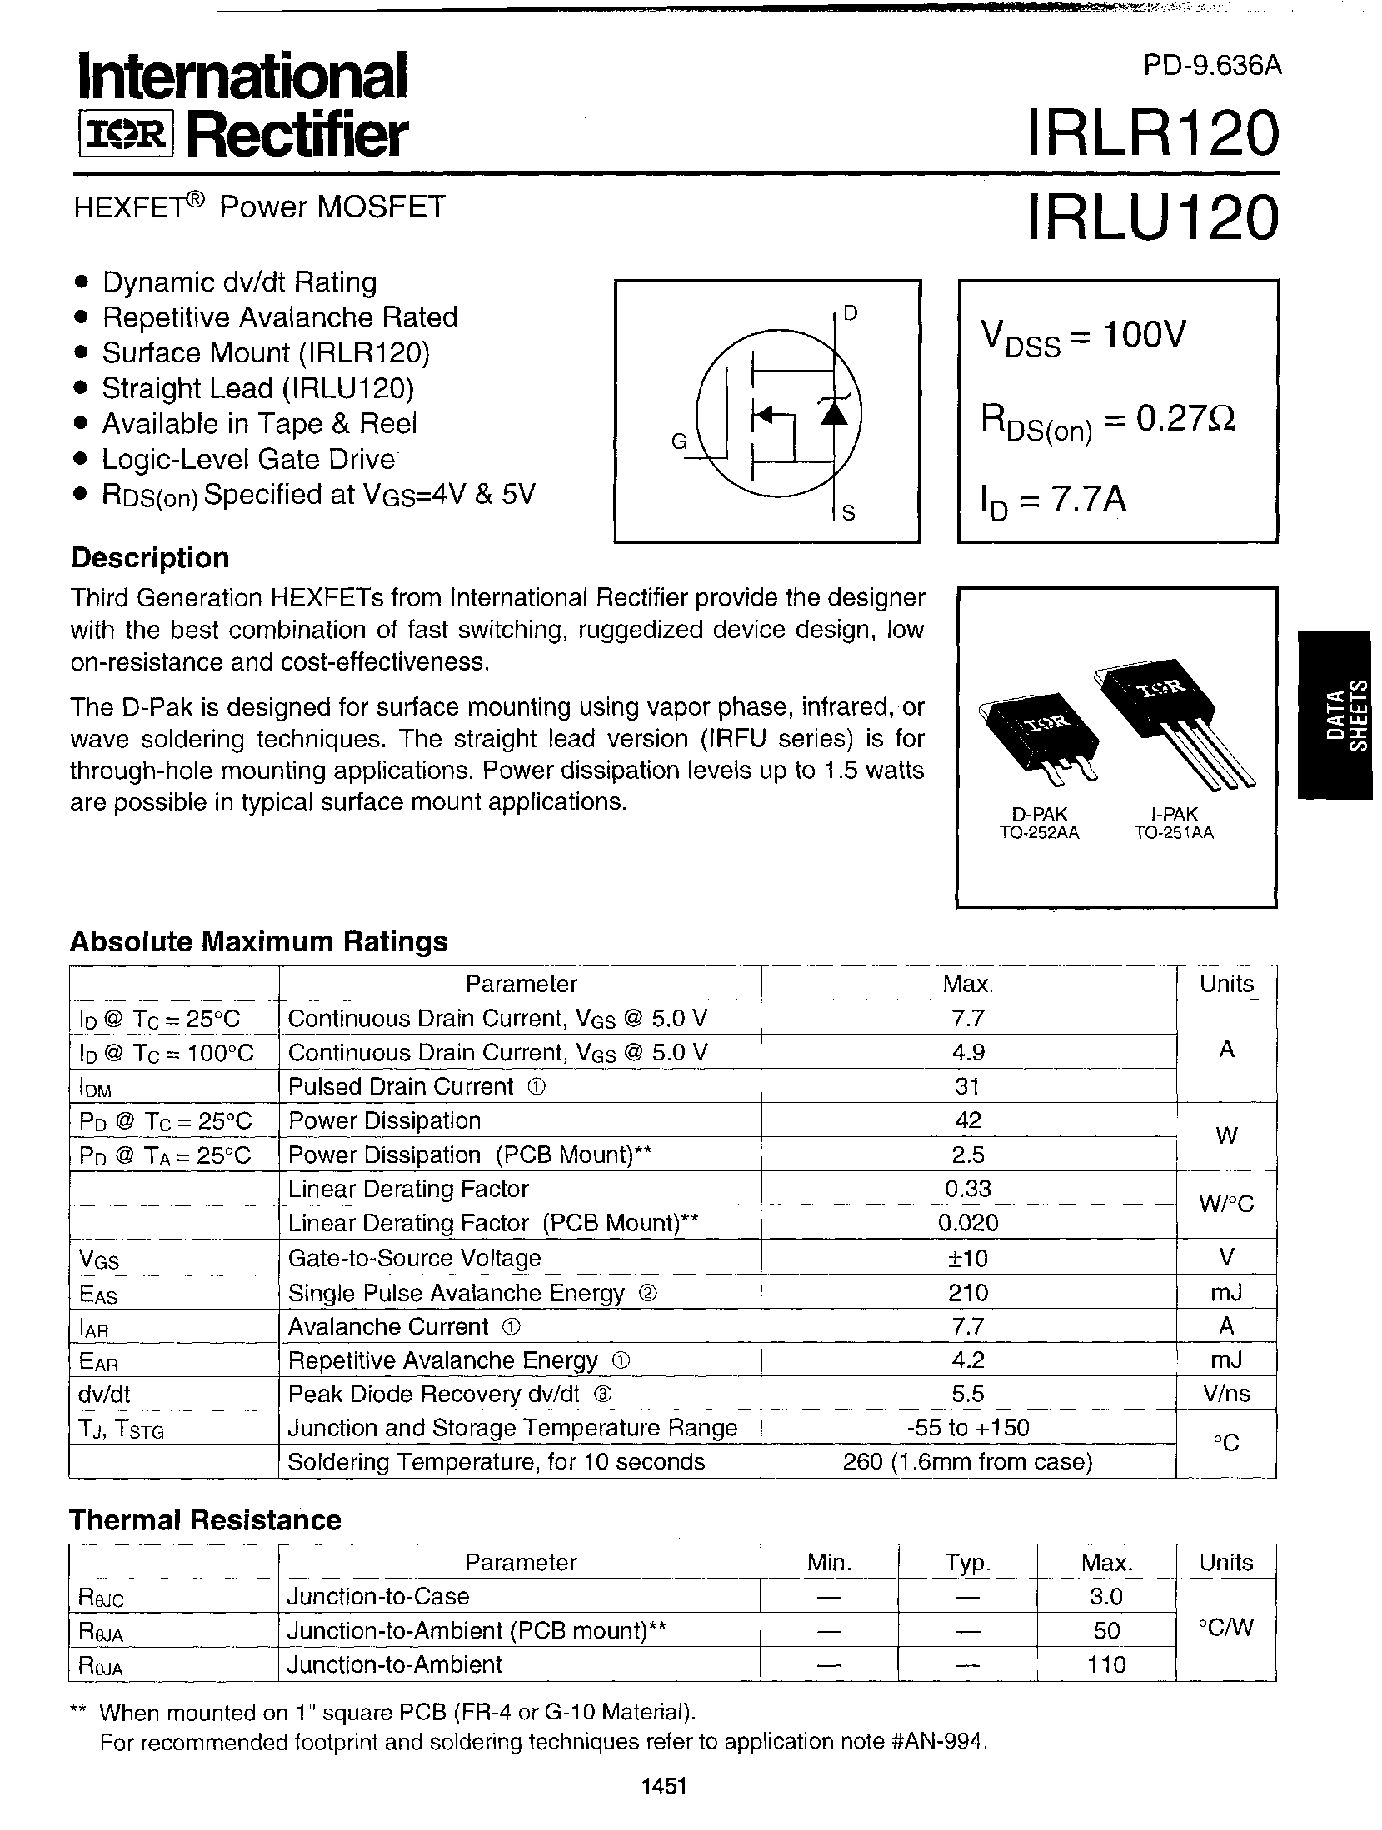 Datasheet IRLR120 - (IRLR120 / IRLU120) HEXFET Power MOSFET page 1